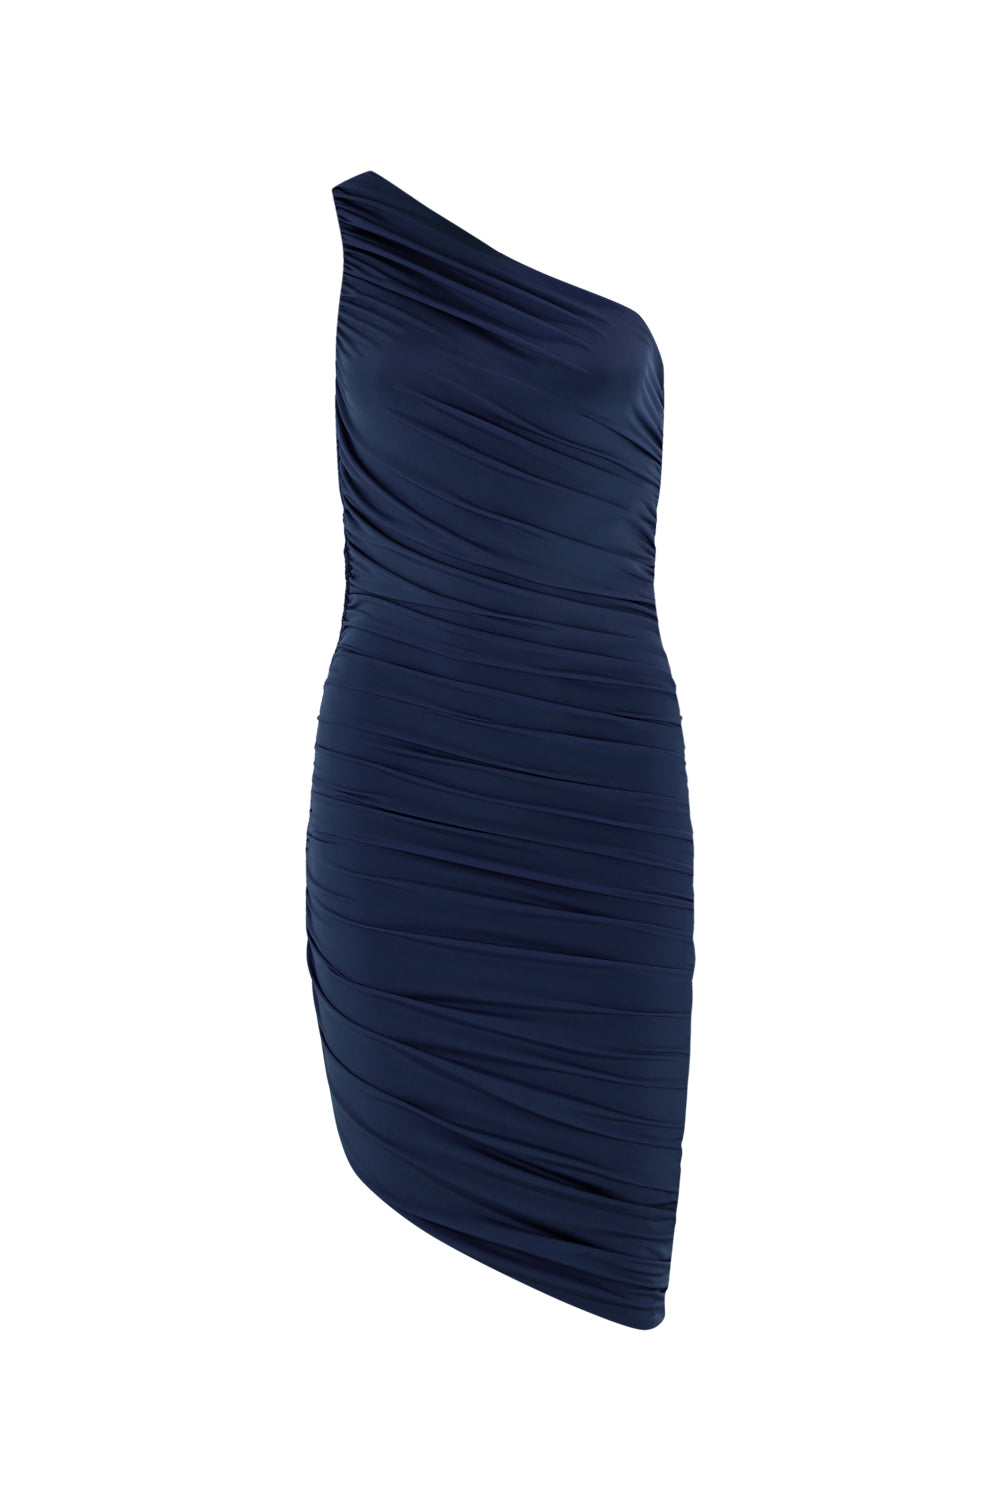 Asymmetrisches drapiertes Kleid – Marineblau